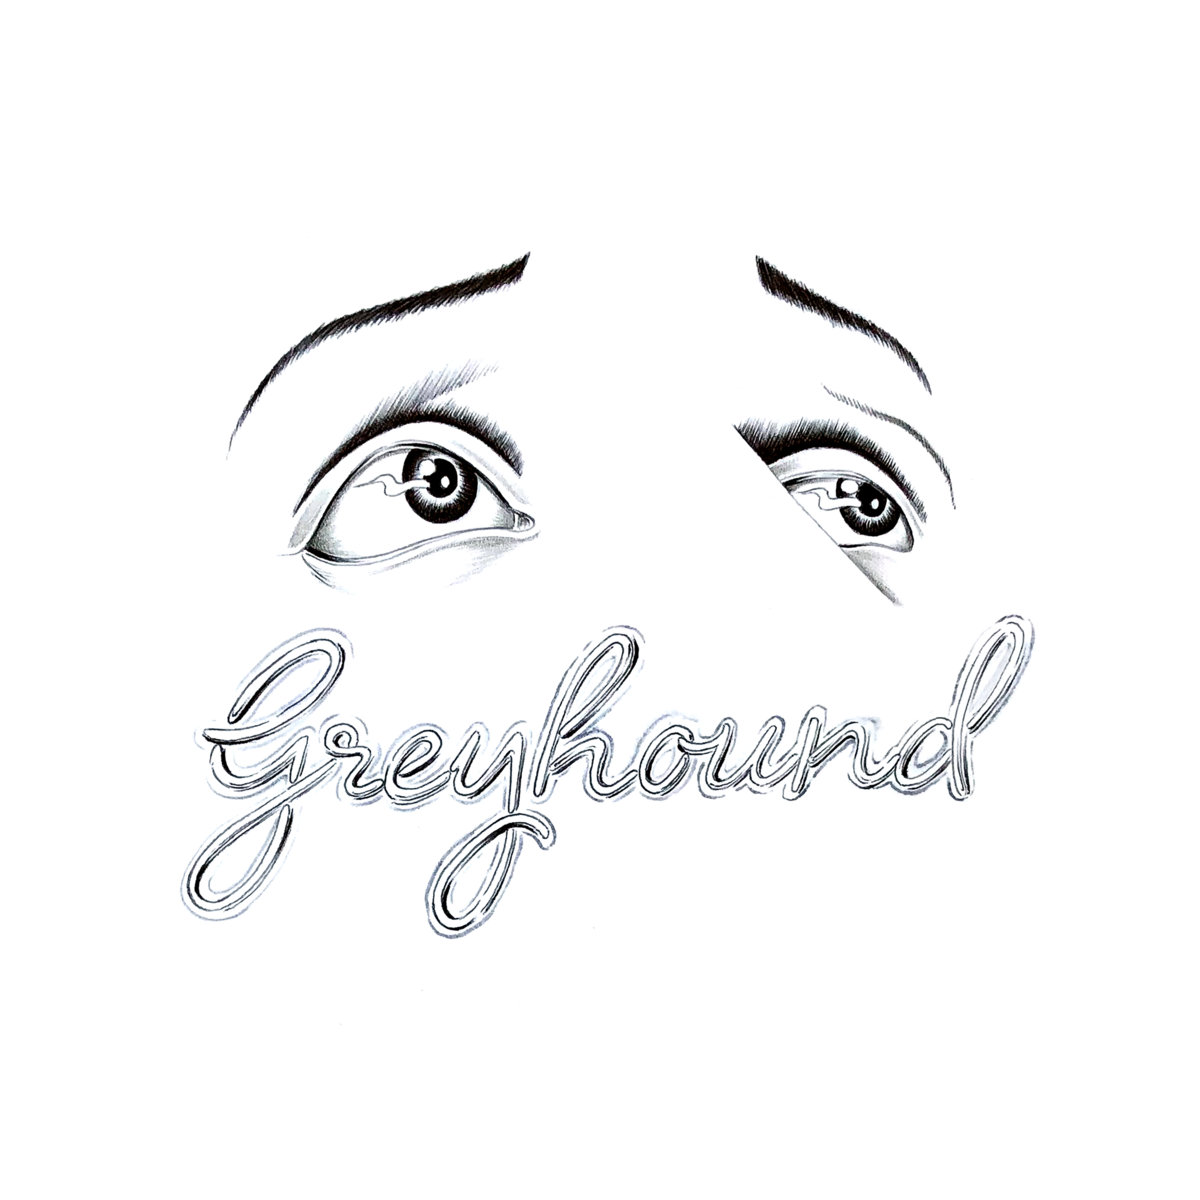 Greyhound - Self Titled CS